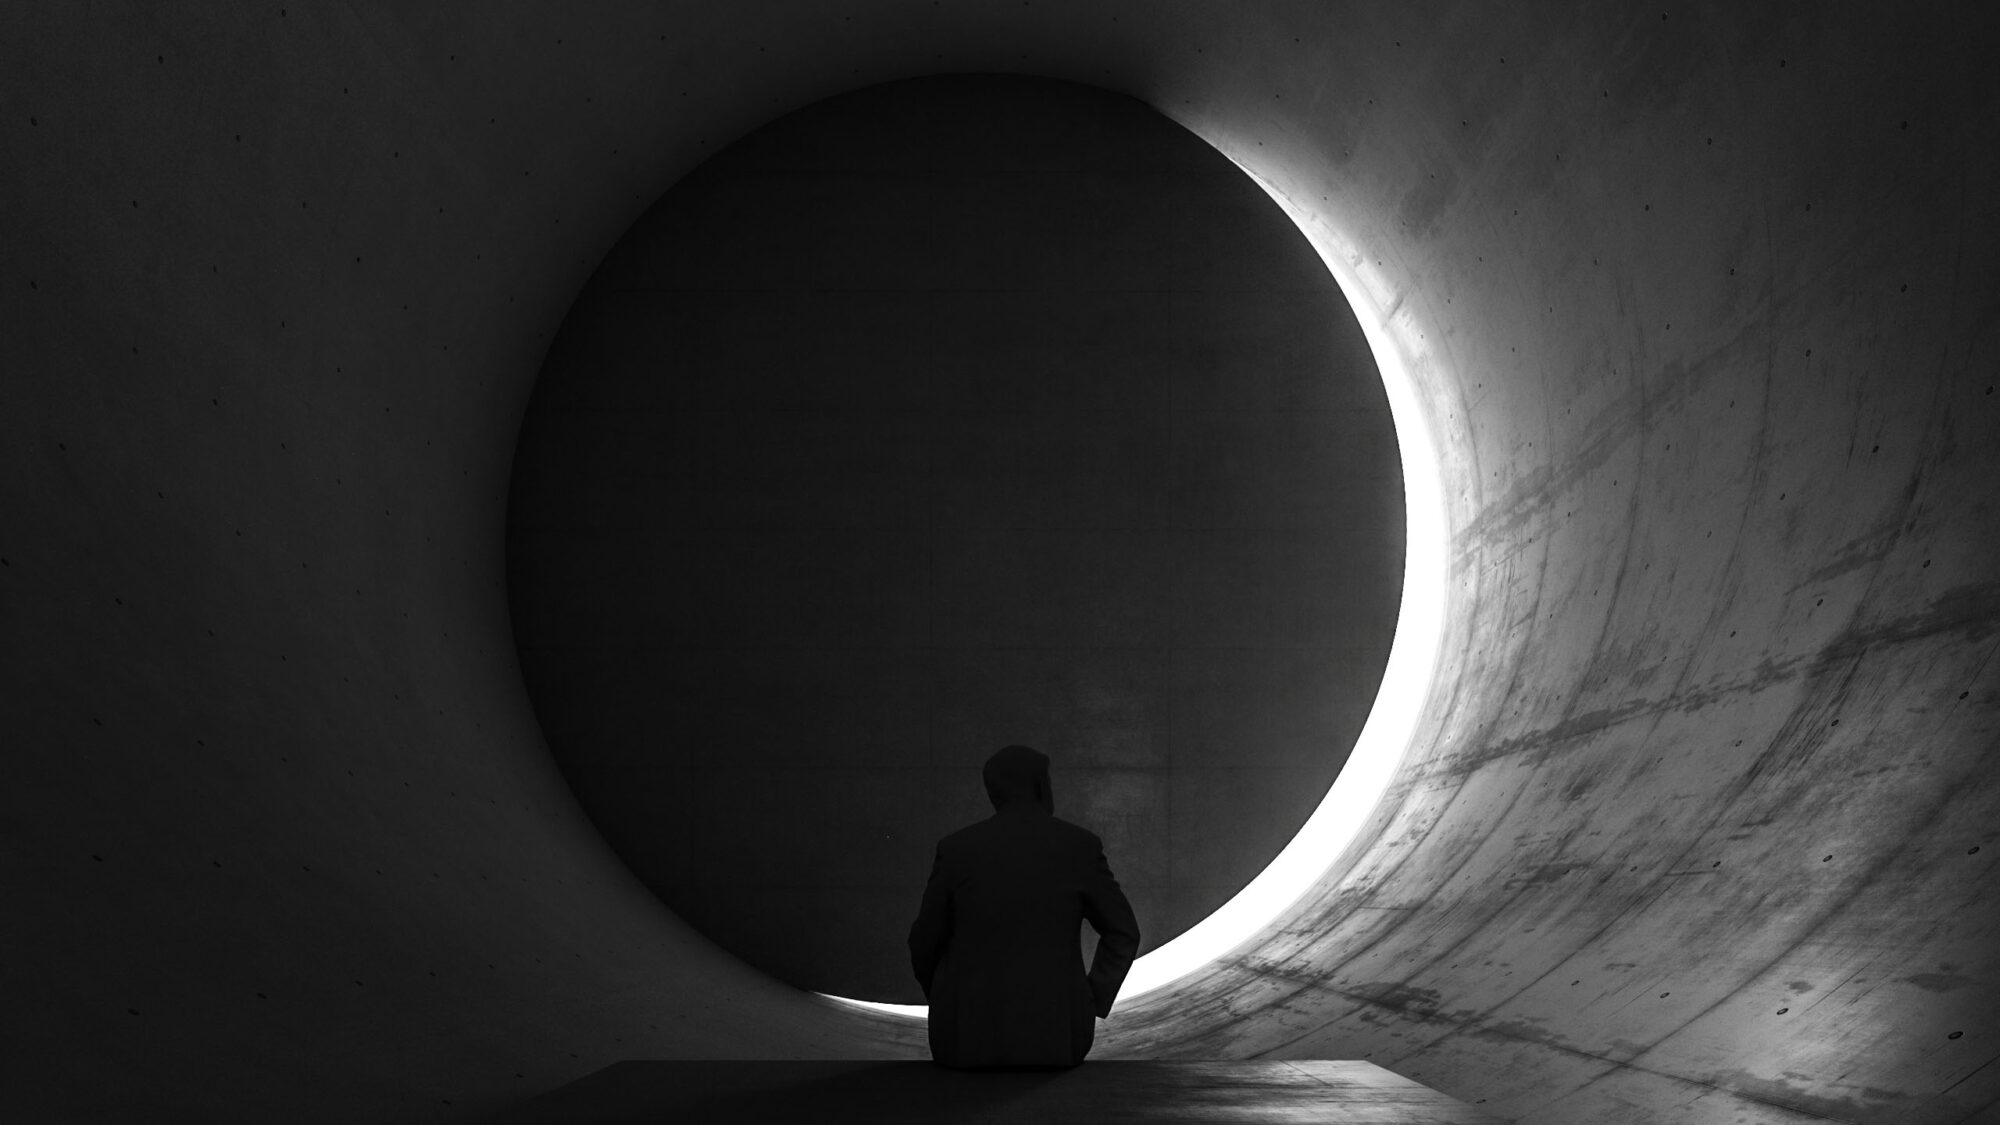 Eclipse-Tunnel of Hope, meditation center